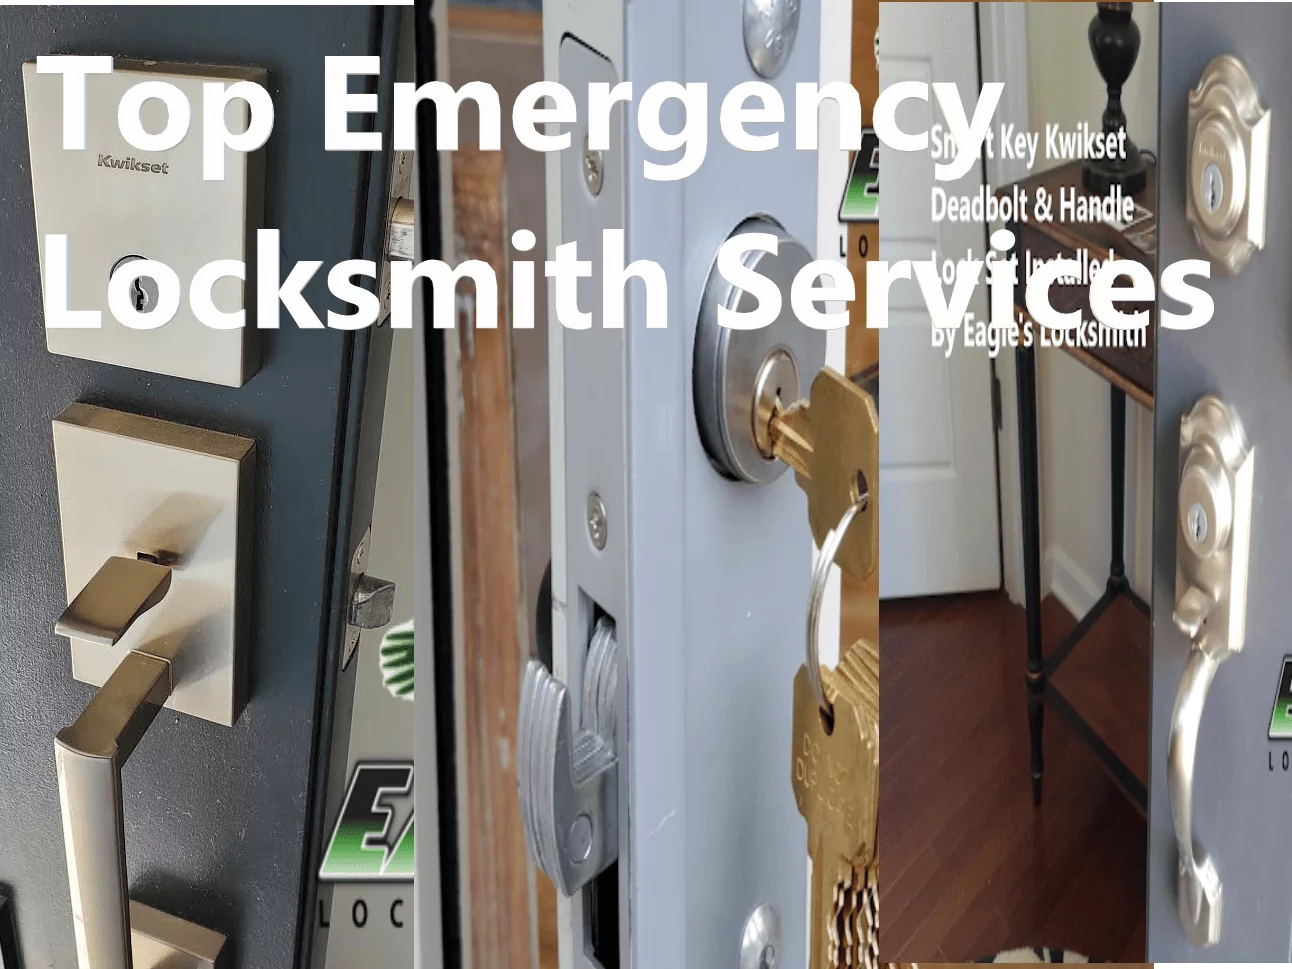 Top Emergency Locksmith Services